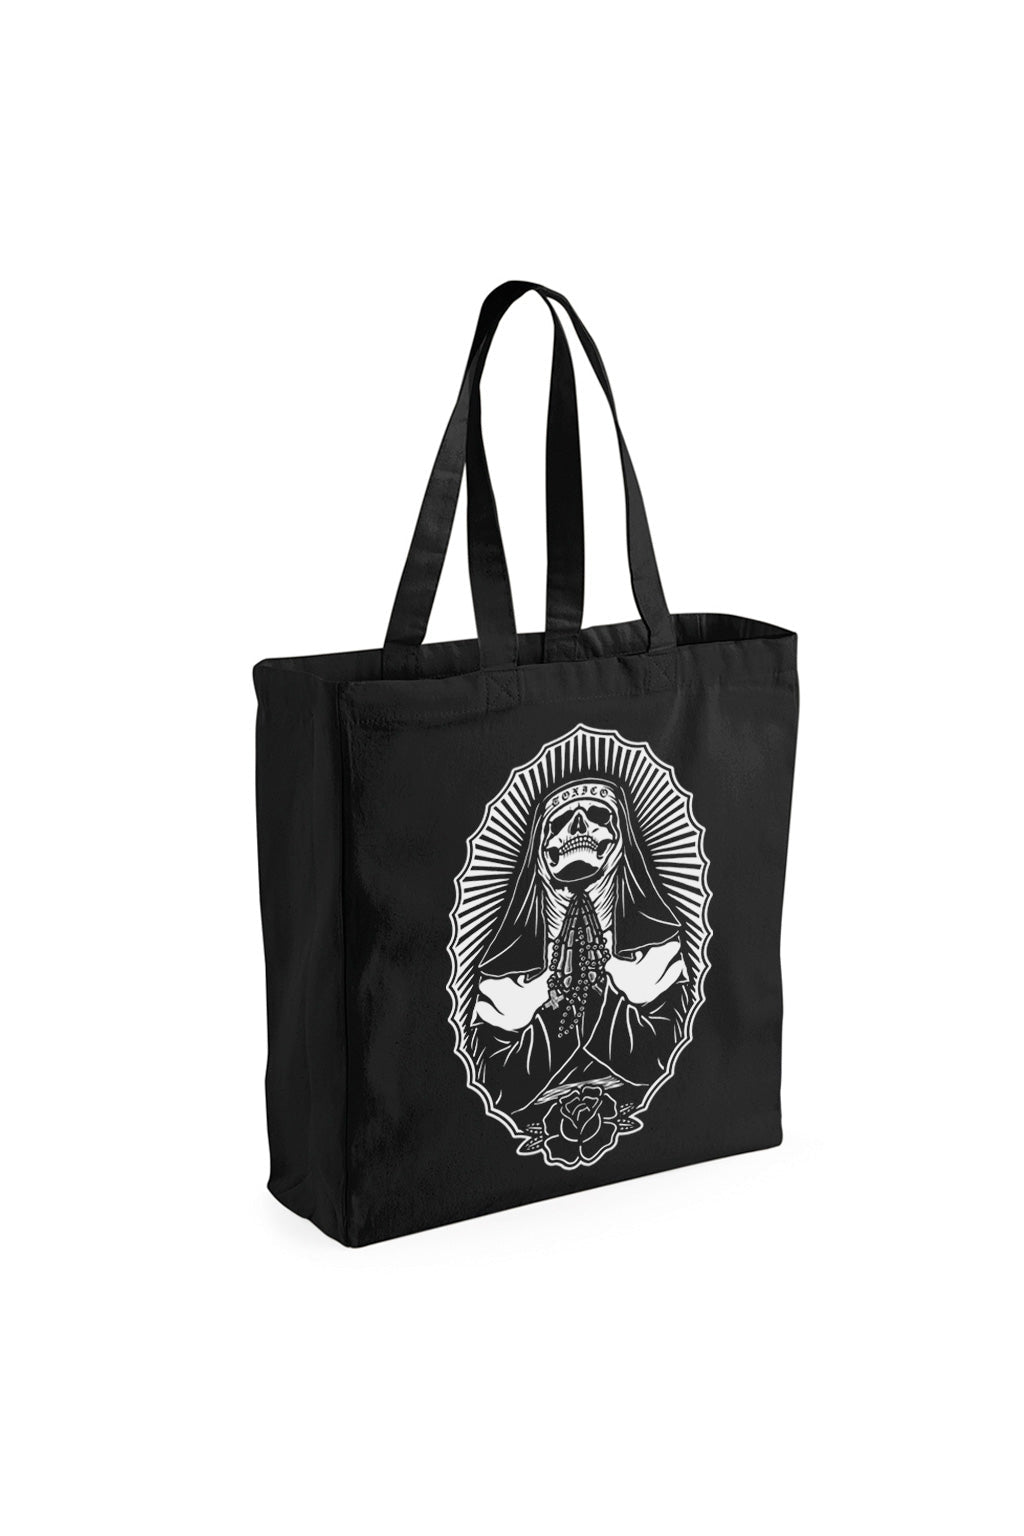 Nun Shopping Bag-Toxico-Dark Fashion Clothing